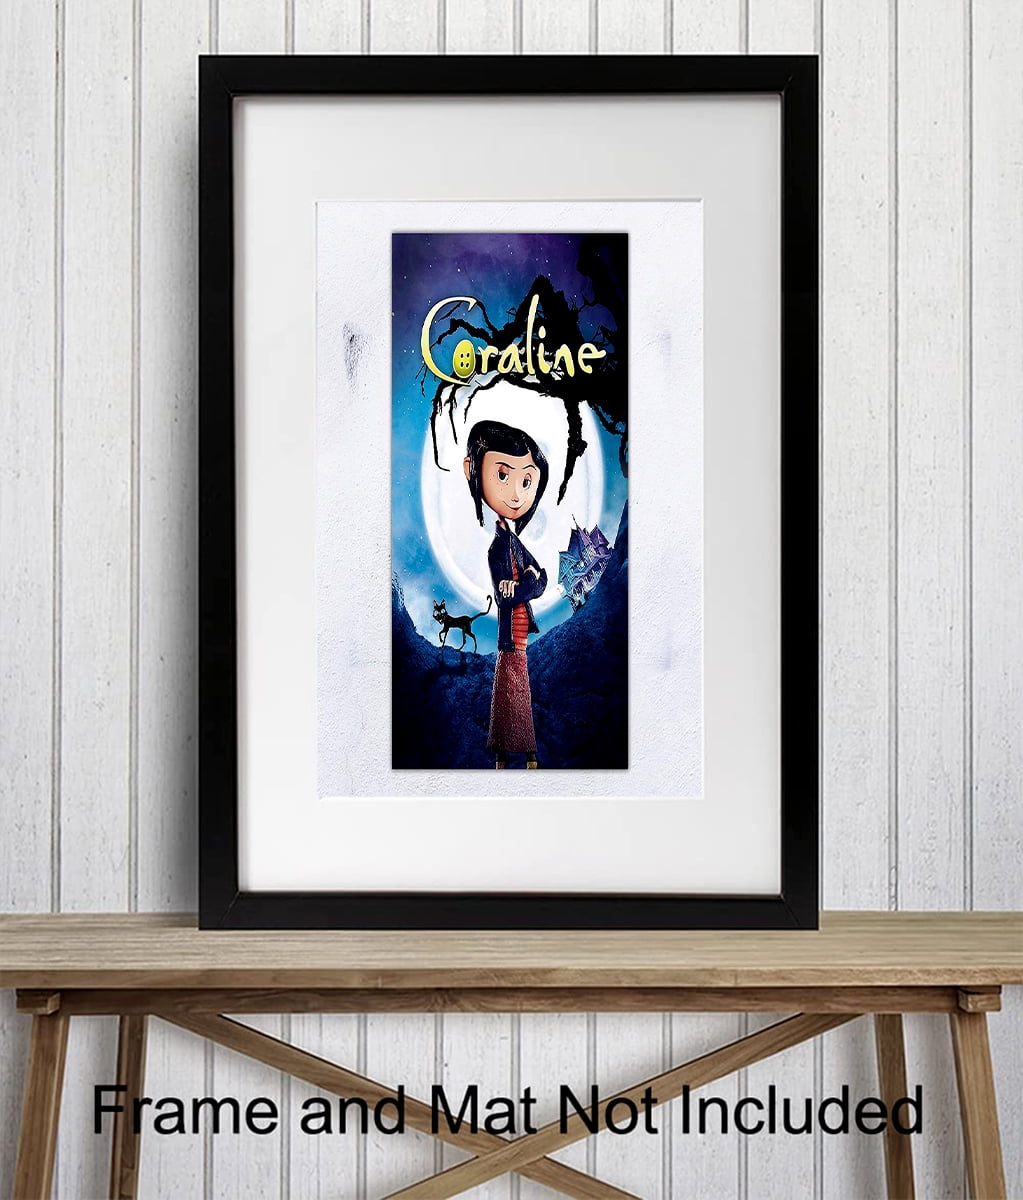 Coraline Movie Poster Wall Decor Frameless Gift 12 x 18 inch(30cm x 46cm) 